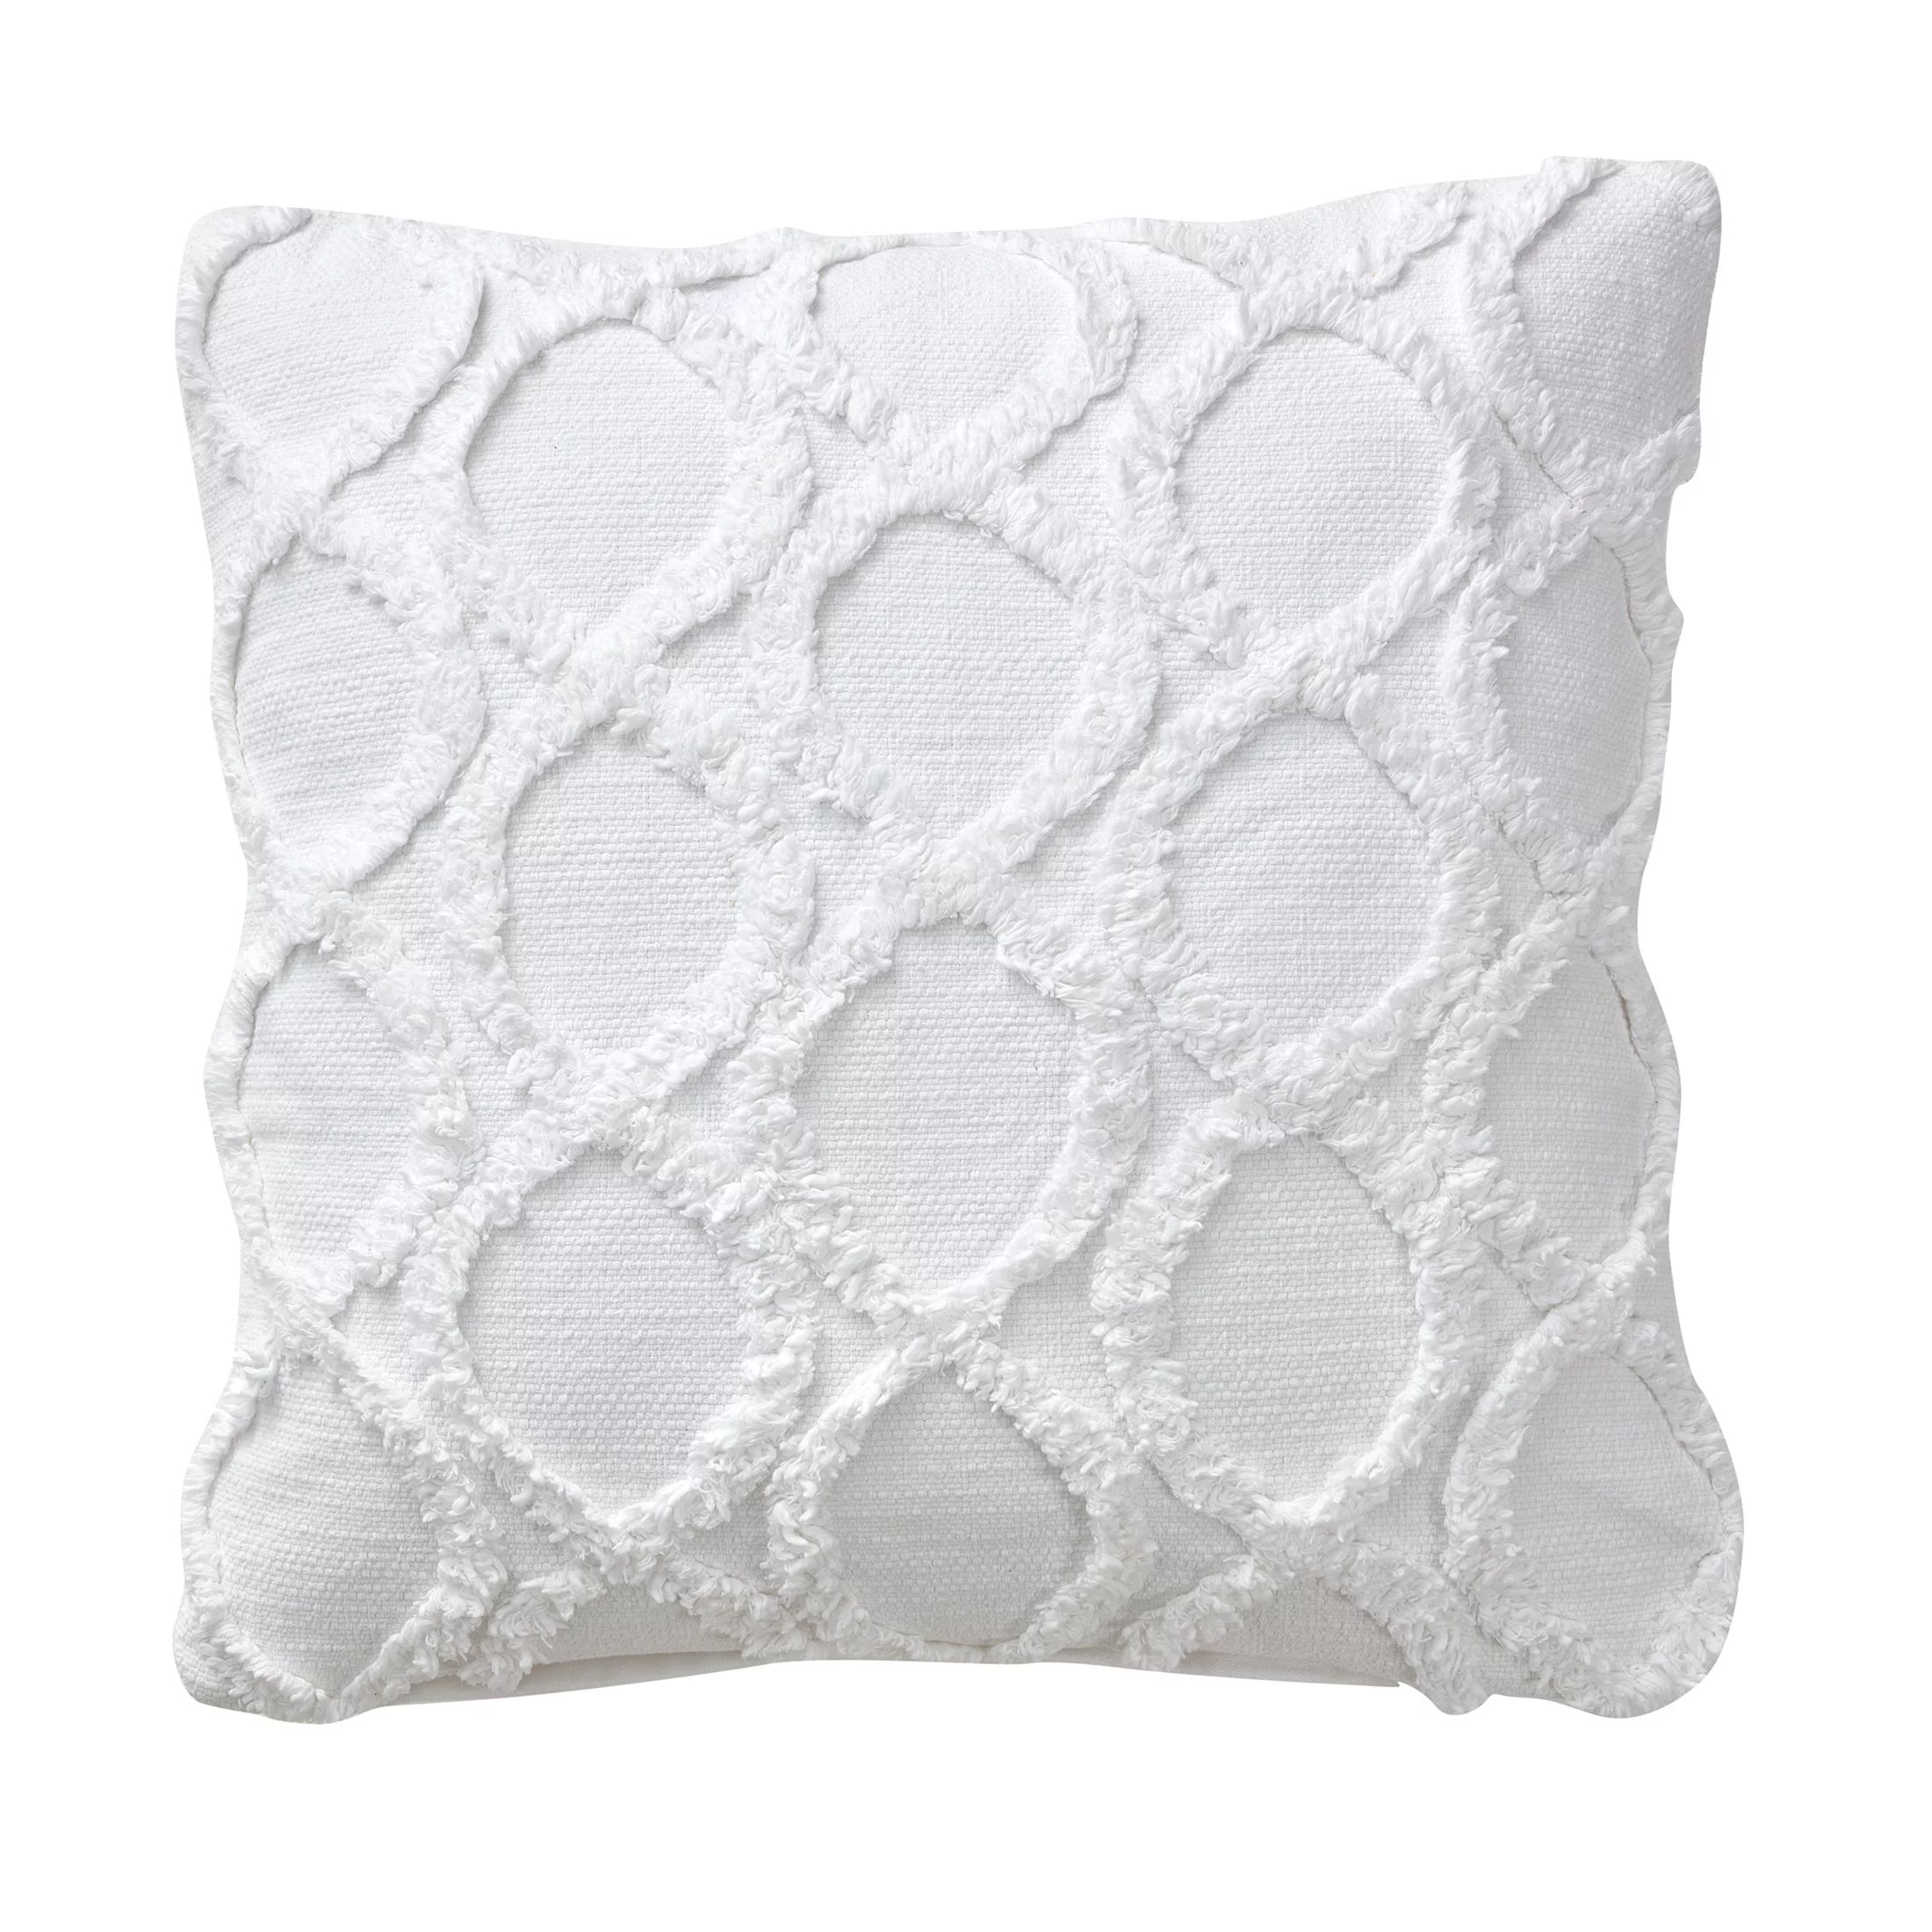 My Texas House Lantana Tufted Cotton Square Decorative Pillow Cover, 20" x 20", White | Walmart (US)